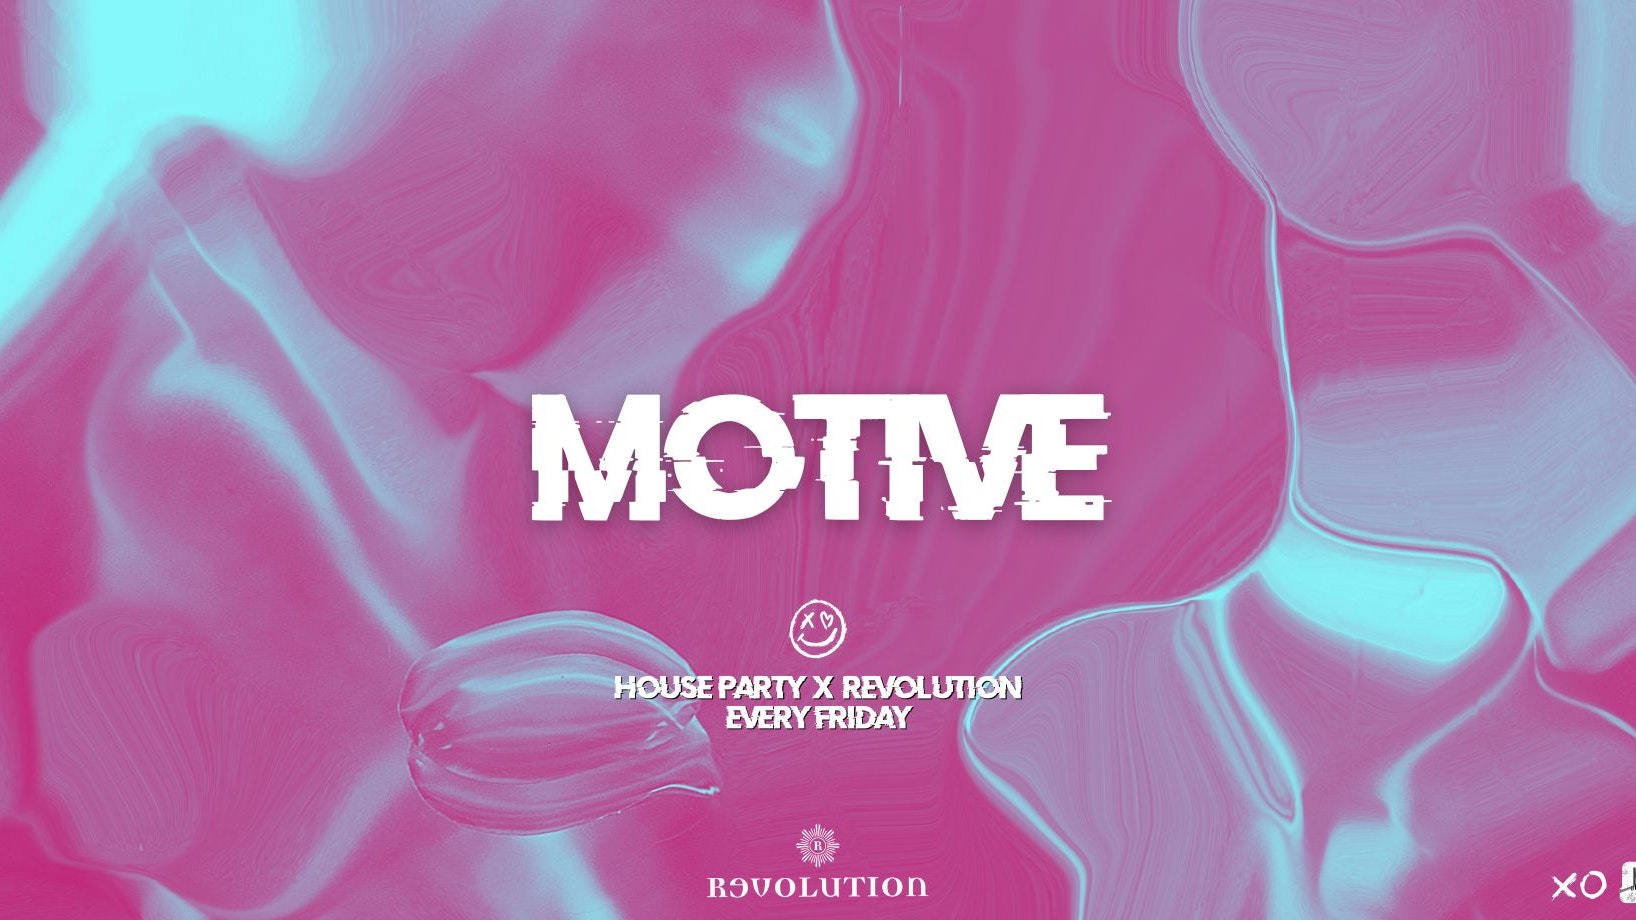 MOTIVE 🔥 HouseParty x Revolution